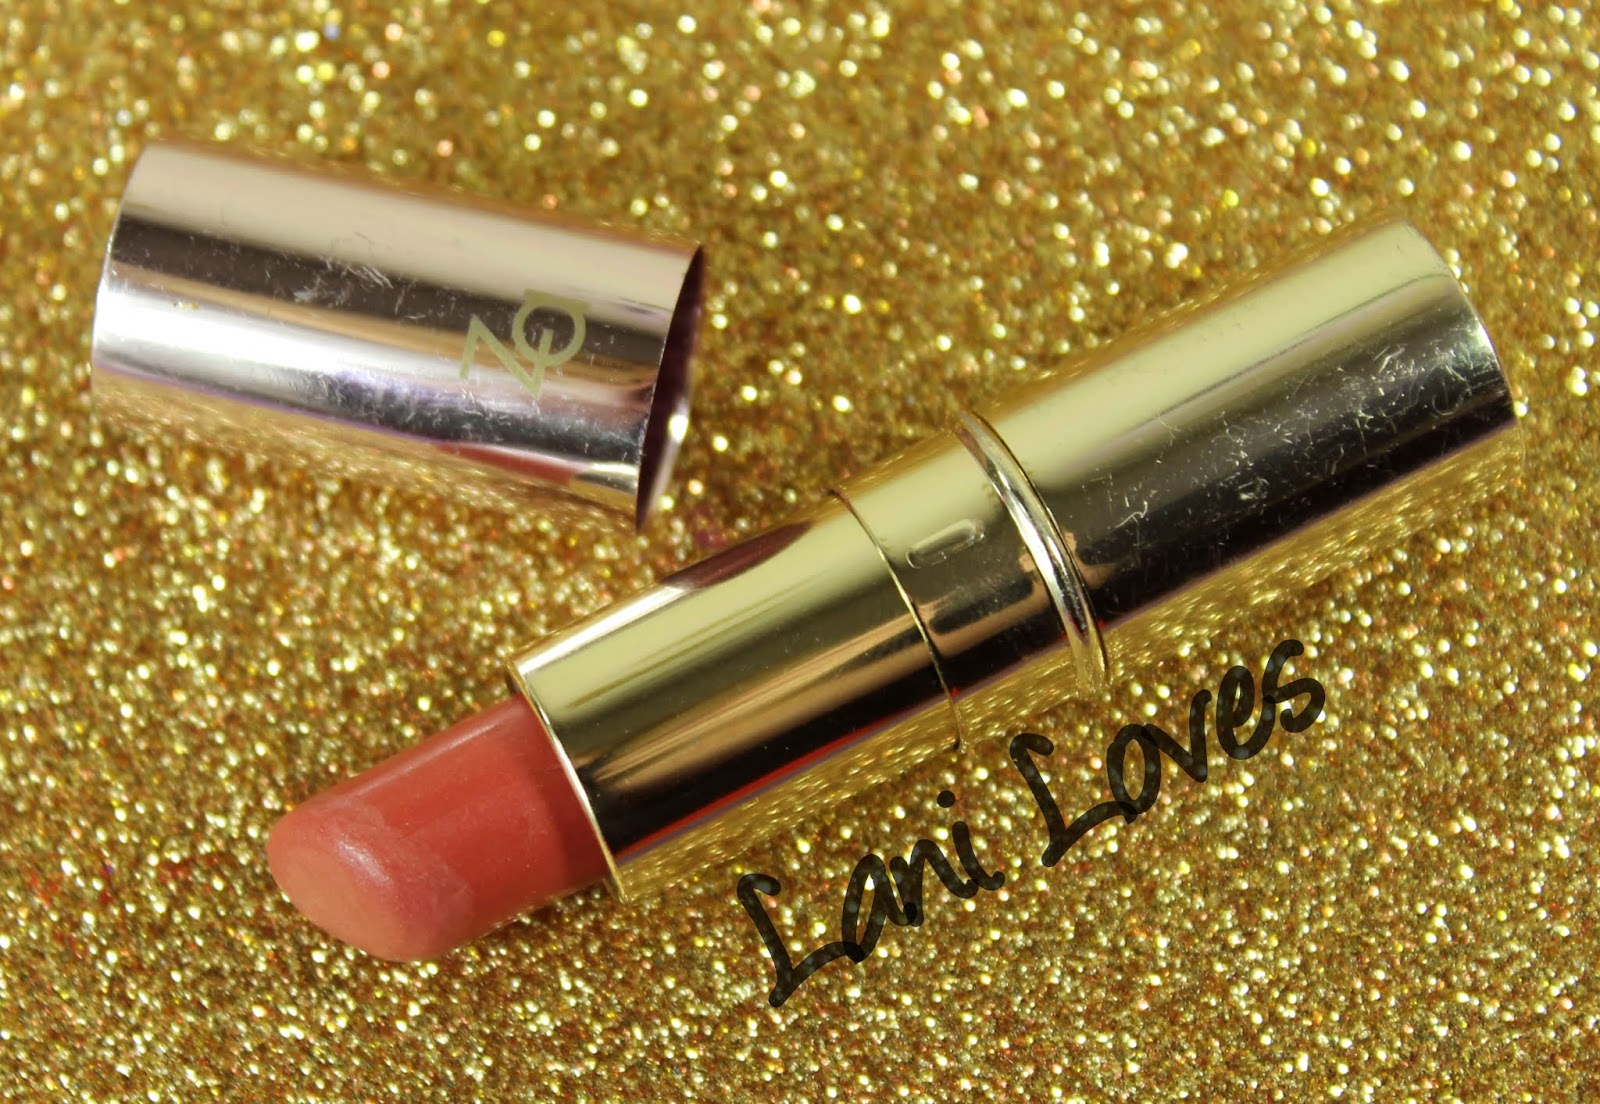 ZA Pure Shine Lips RD2 Honey Rouge lipstick review